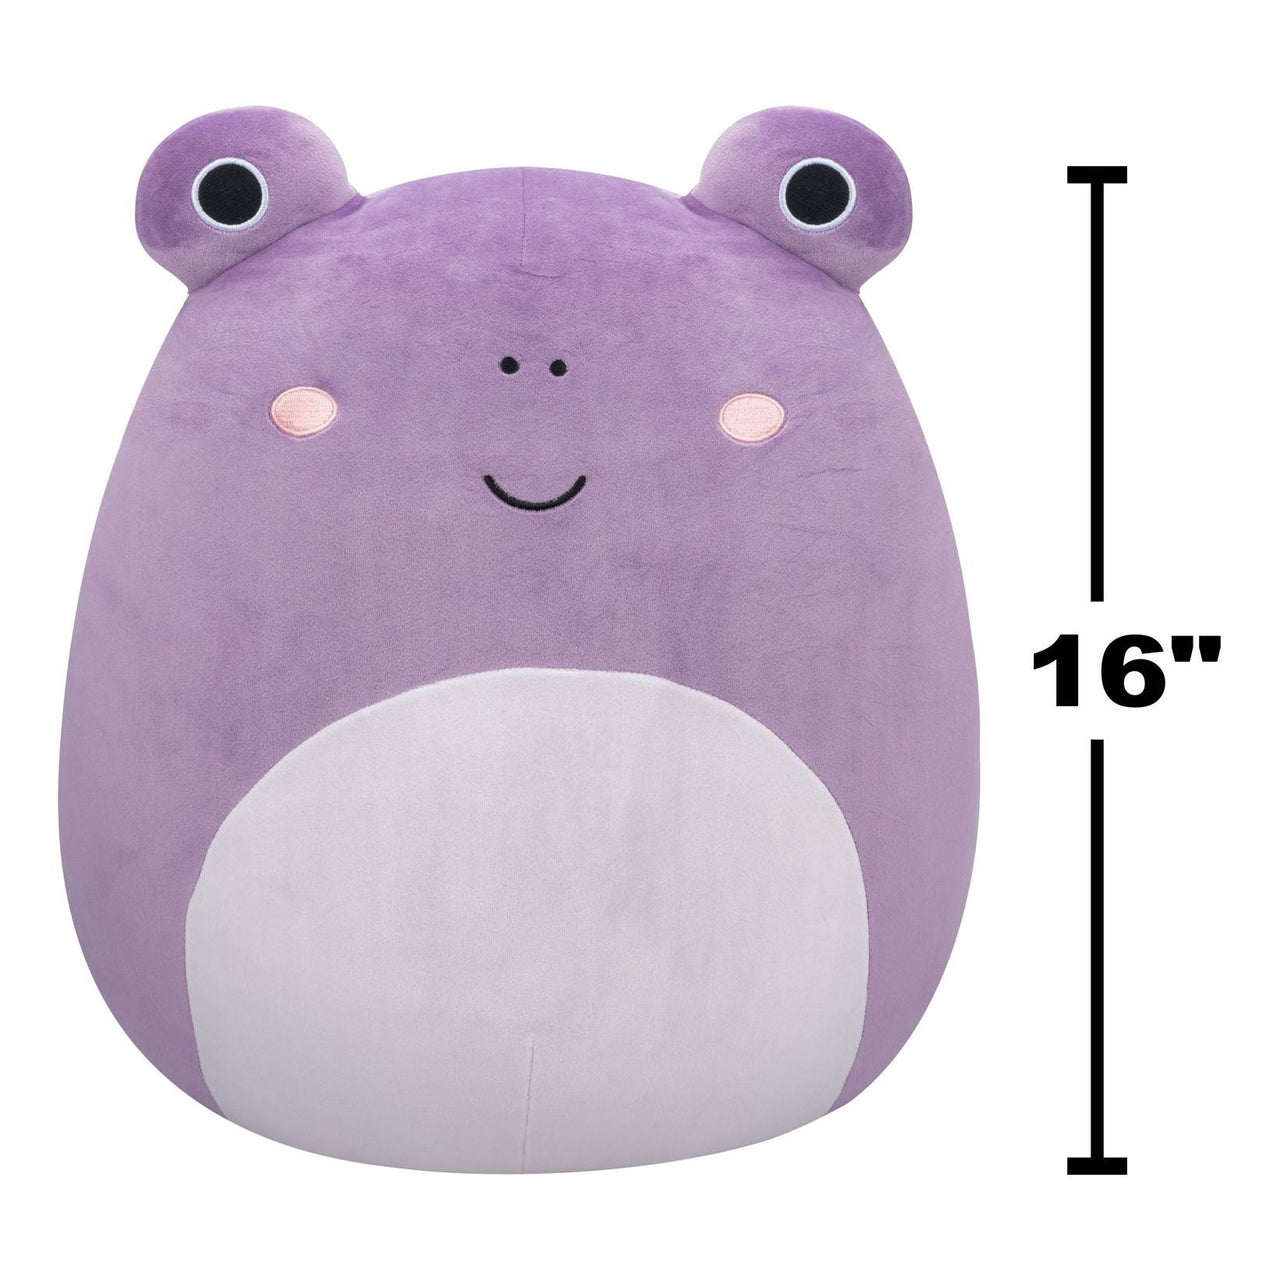 Squishmallows 16 Philomena the Purple Toad Plush – Unicorn & Punkboi